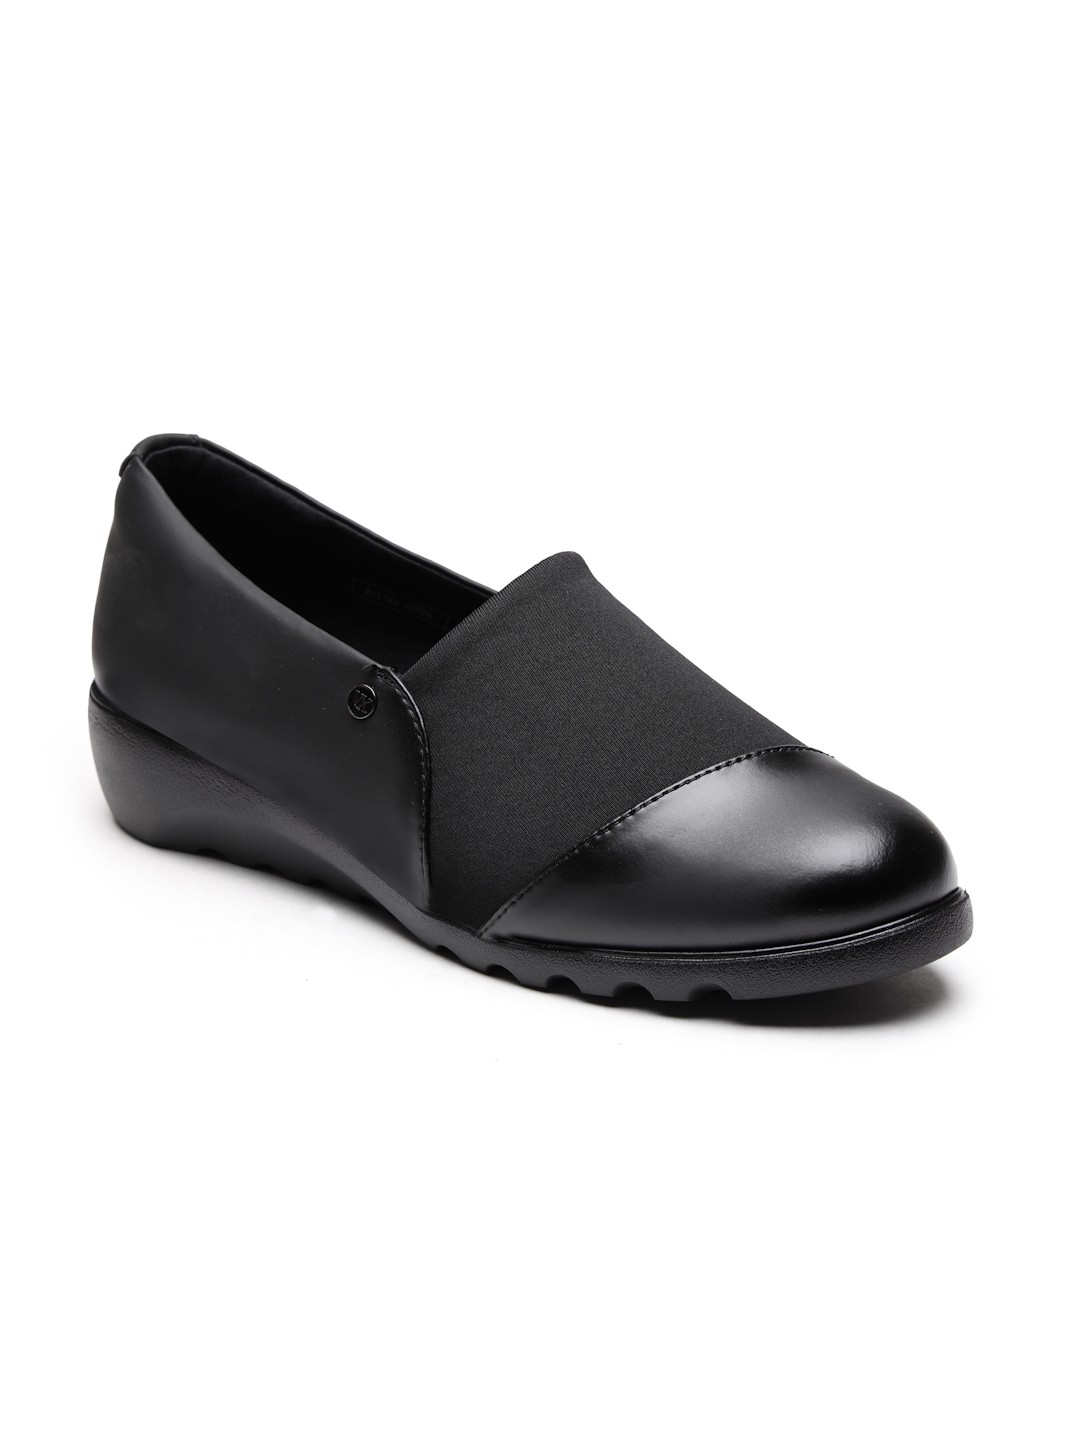 Buy Von Wellx Germany Comfort Women's Black Casual Shoes Ayla Online in Pune